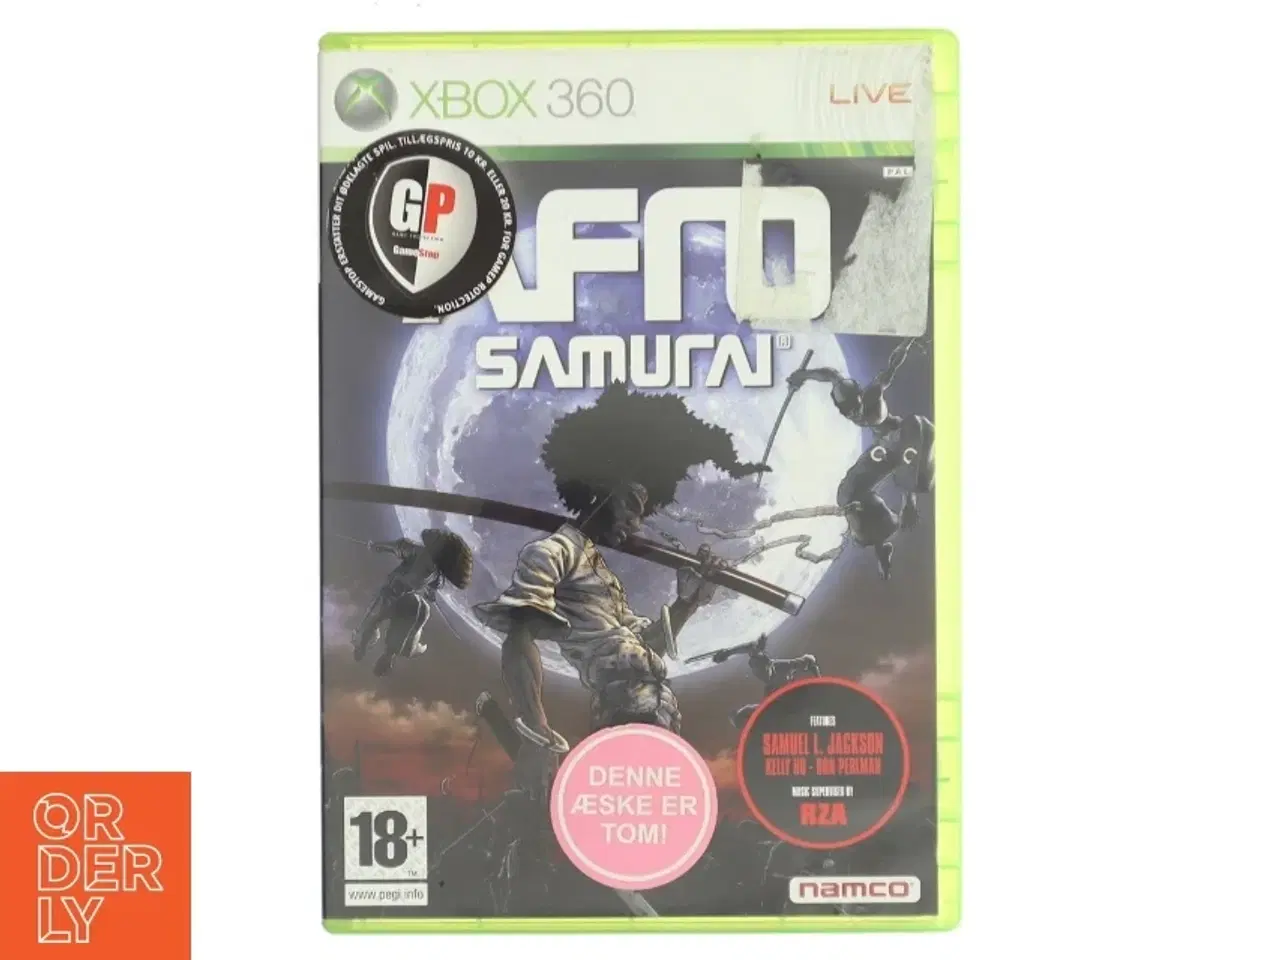 Billede 1 - Afro Samurai Xbox 360 spil fra Namco Bandai Games